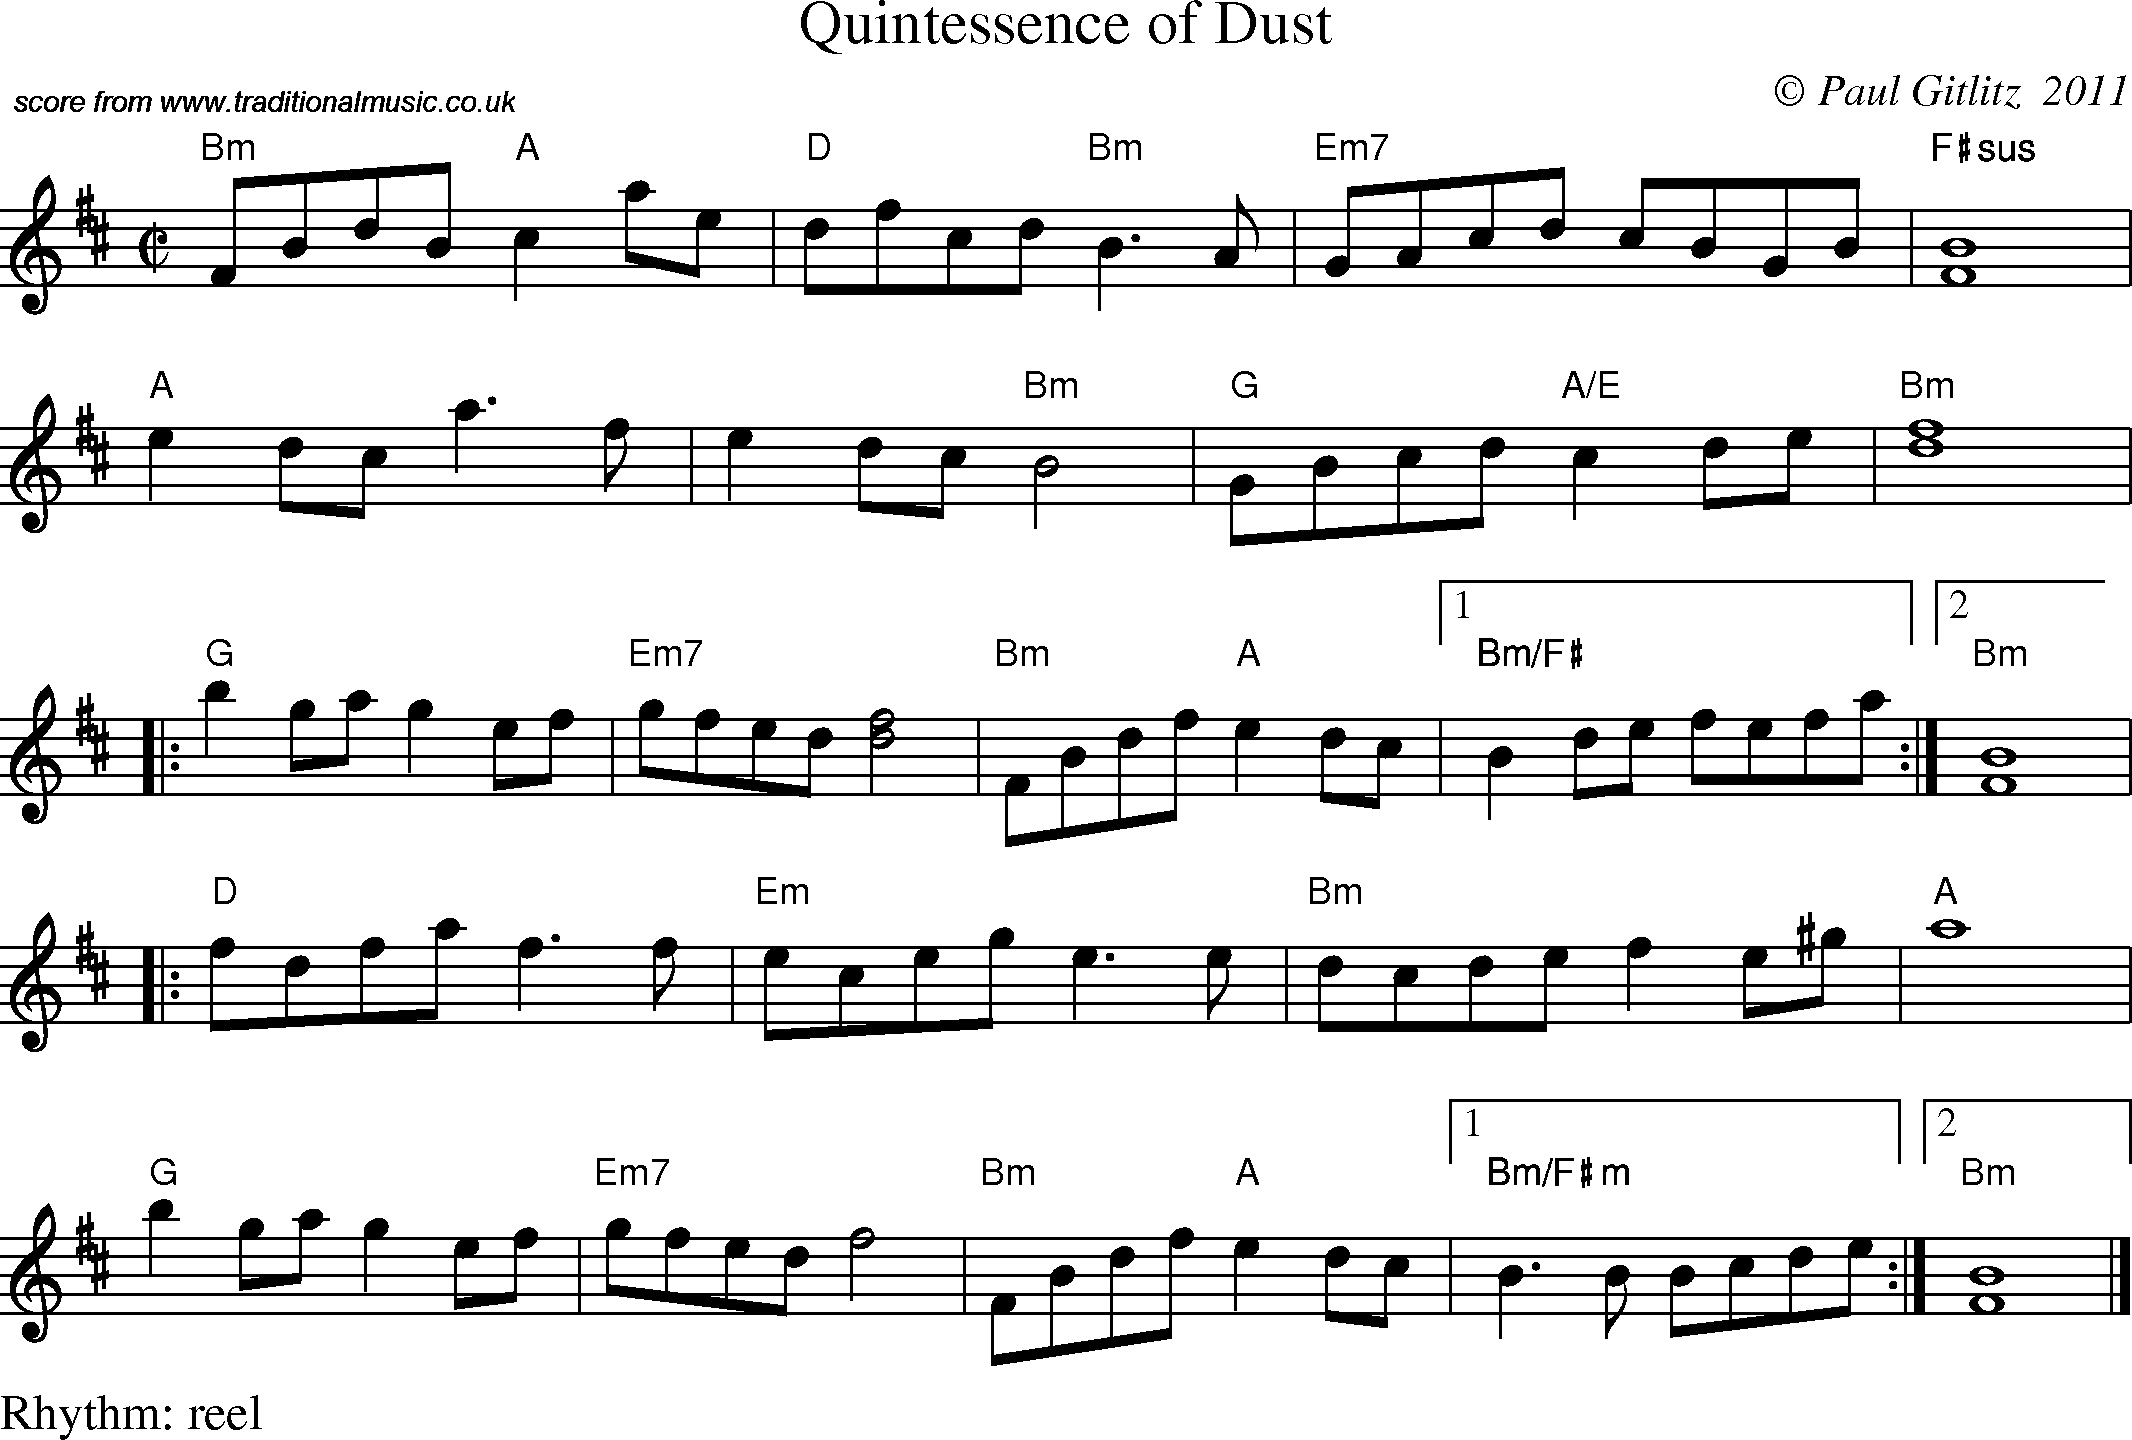 Sheet Music Score for Reel - Quintessence of Dust